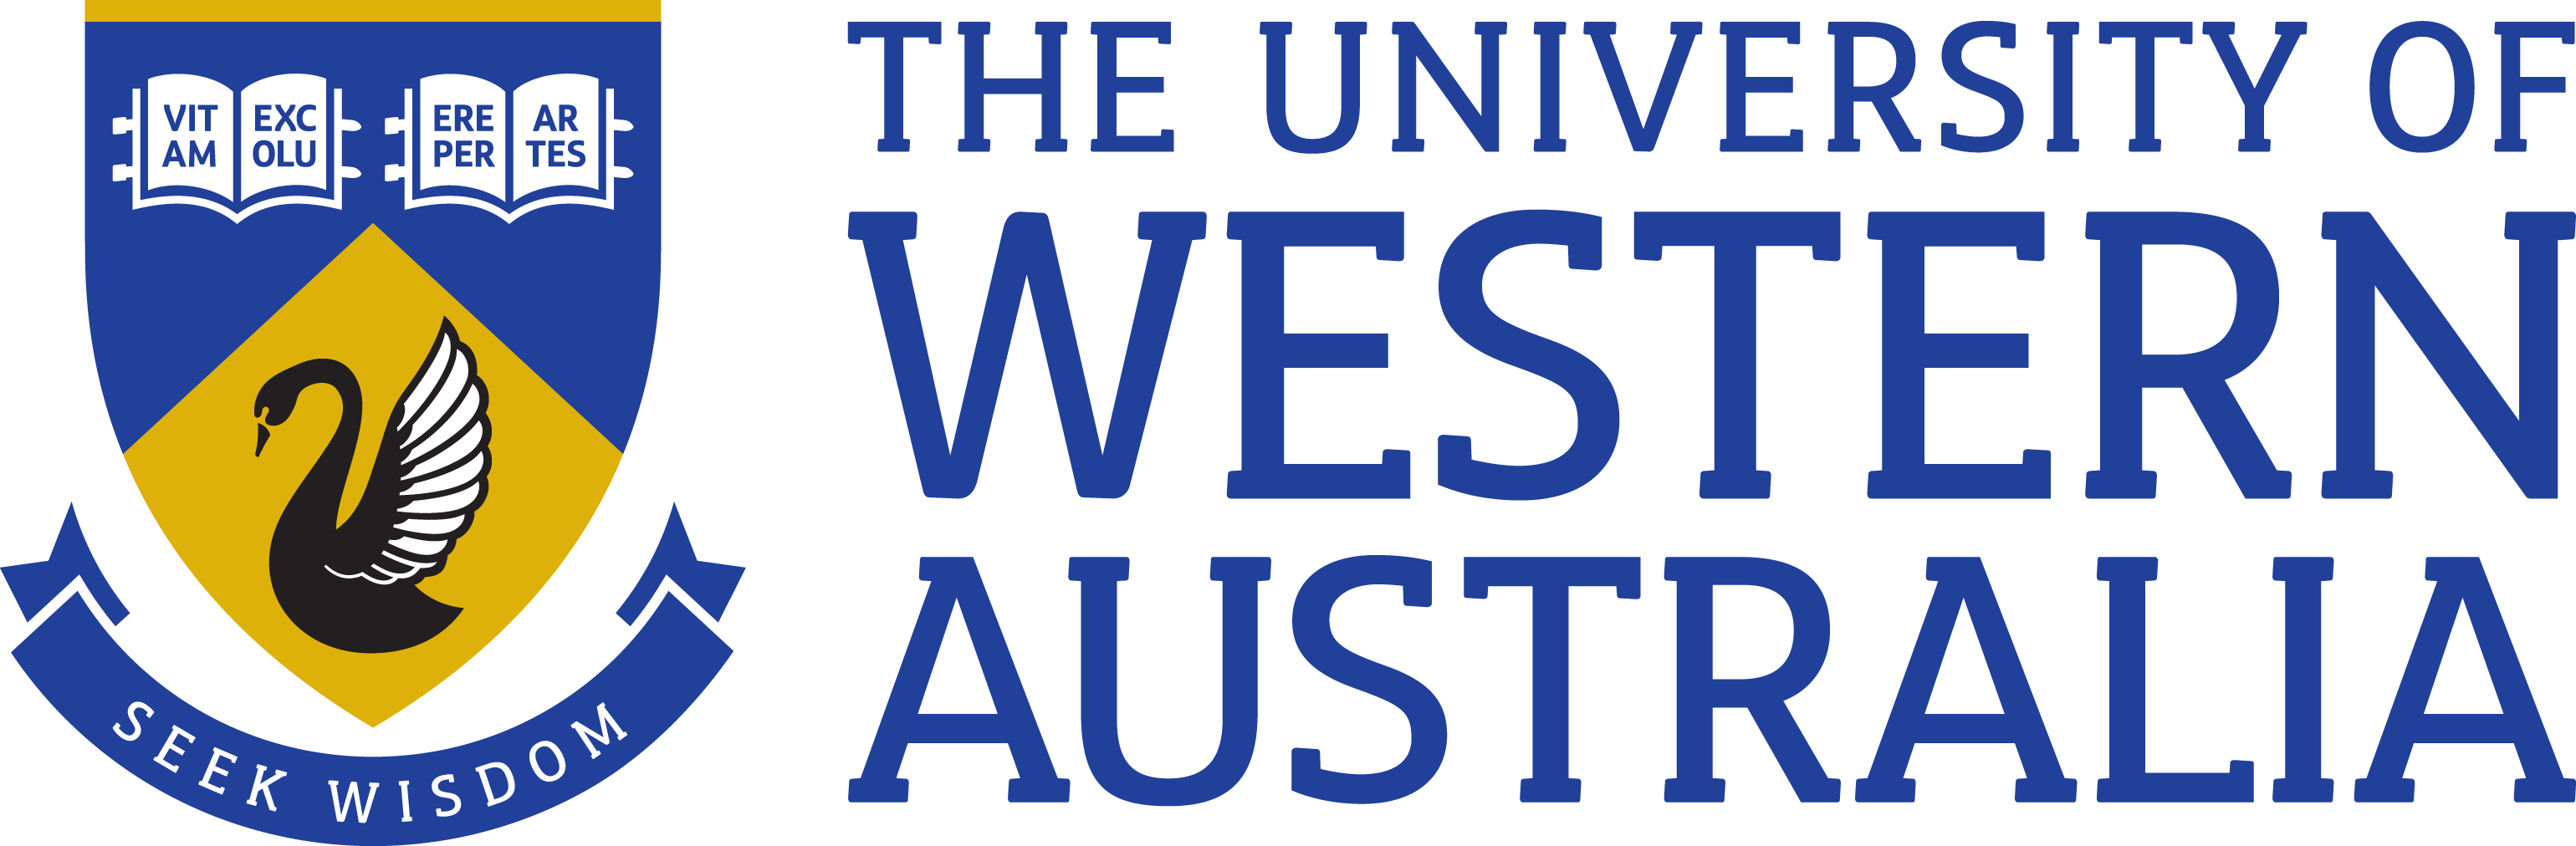 The University of Western Australia, Australia